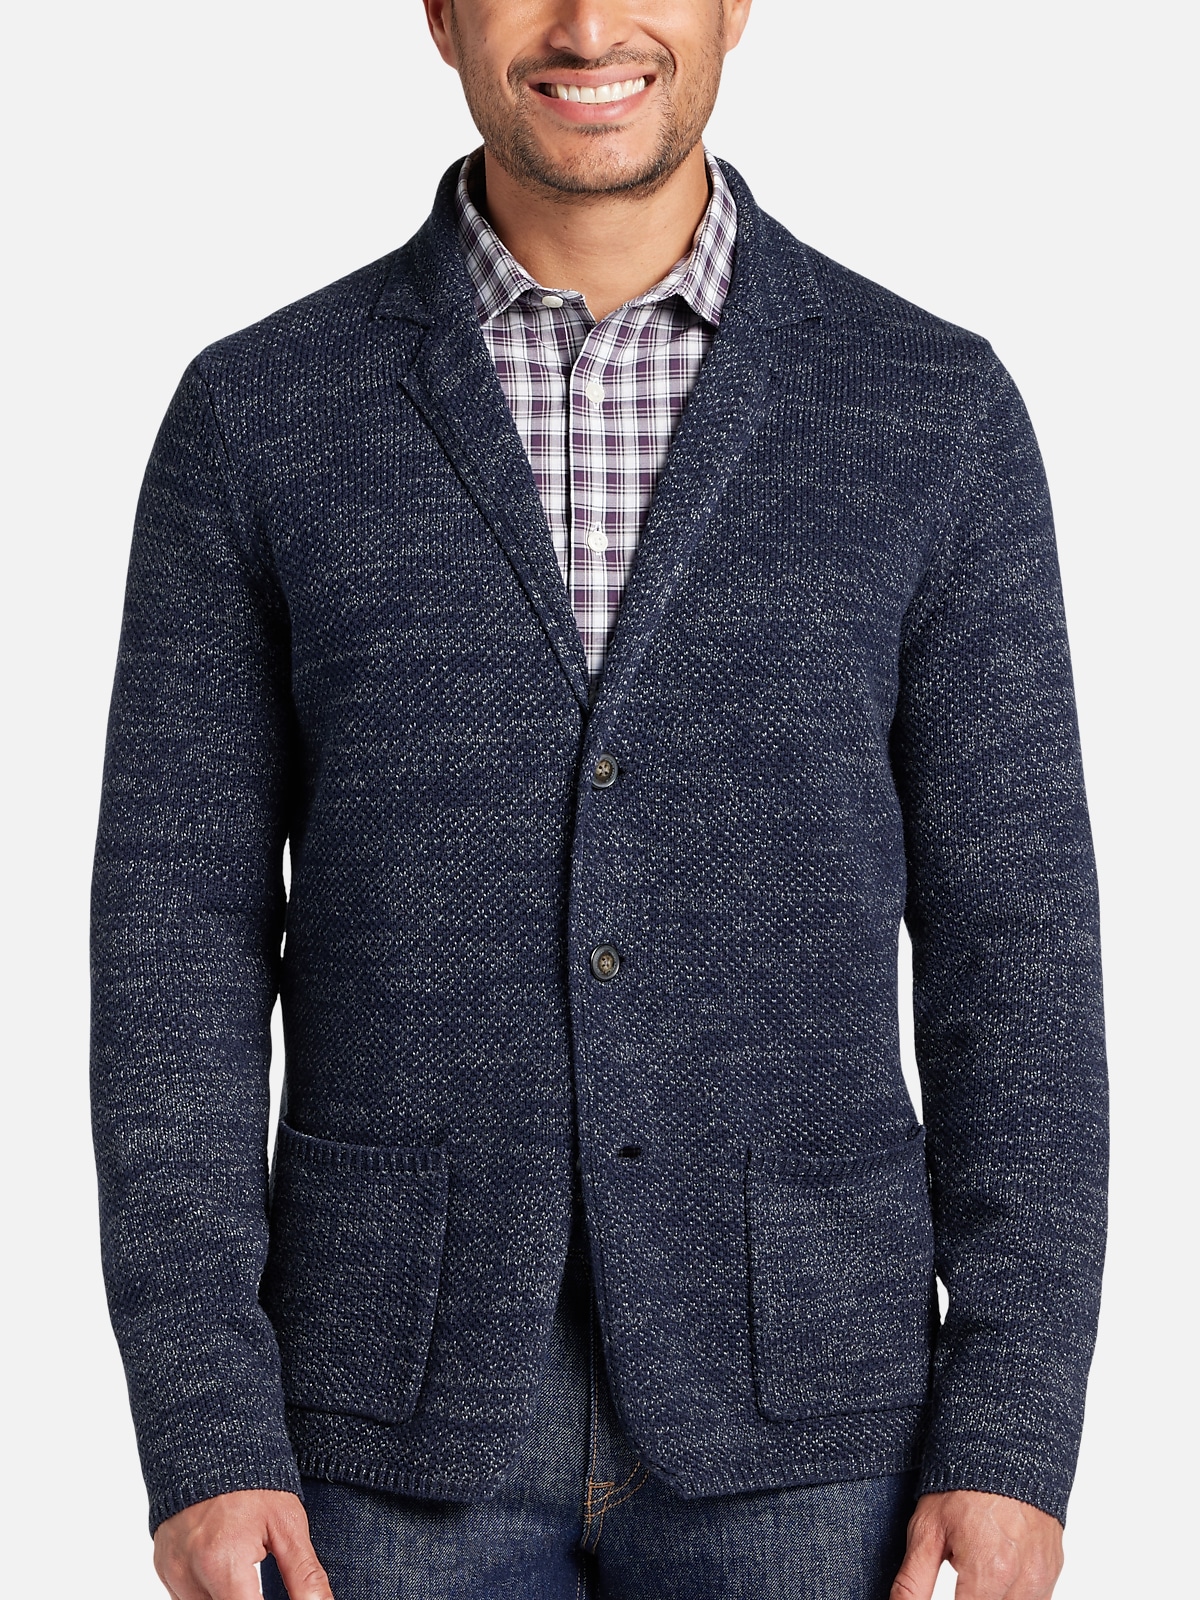 Joseph Abboud Modern Fit Sweater Blazer, All Sale